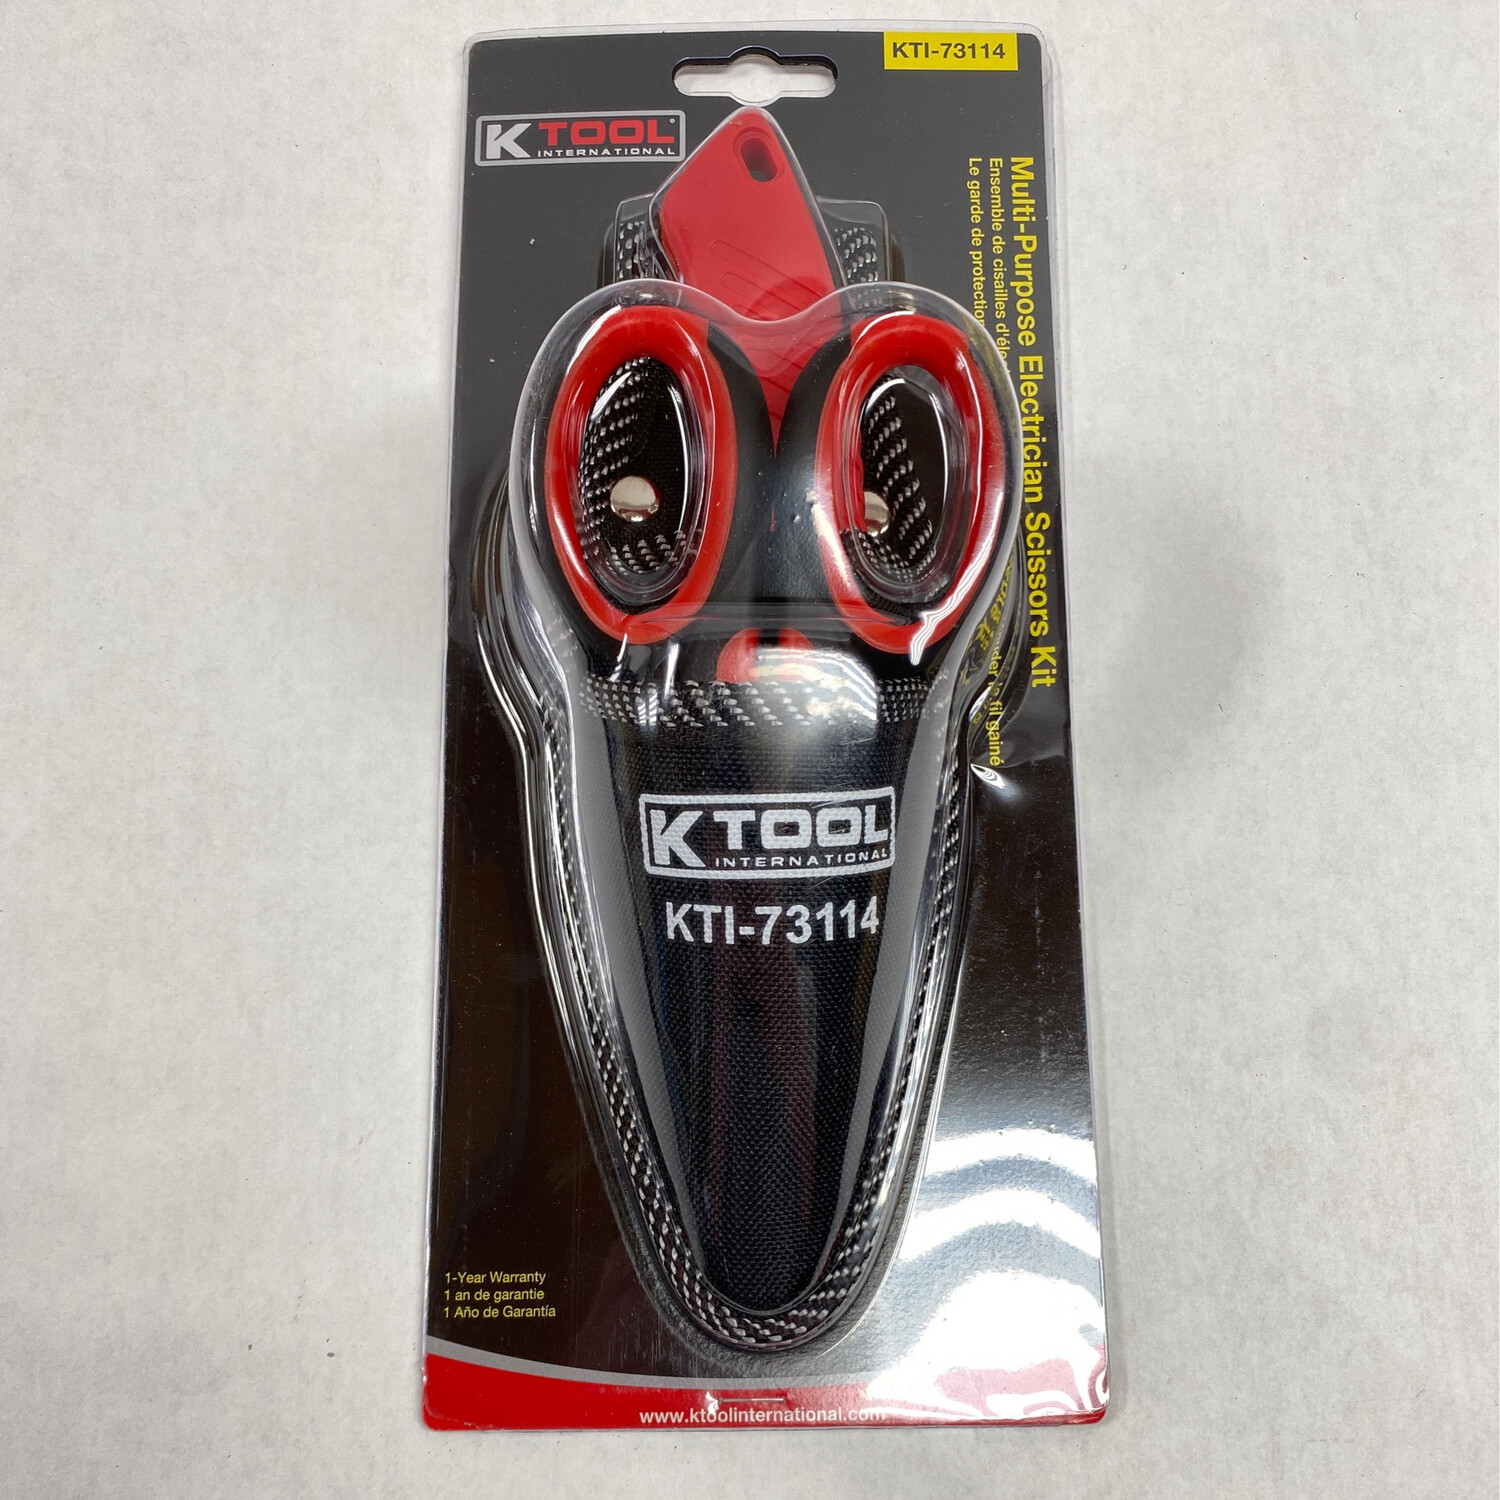 NEW K Tool Multi-Purpose Electrician Scissors Kit, KTI-73114